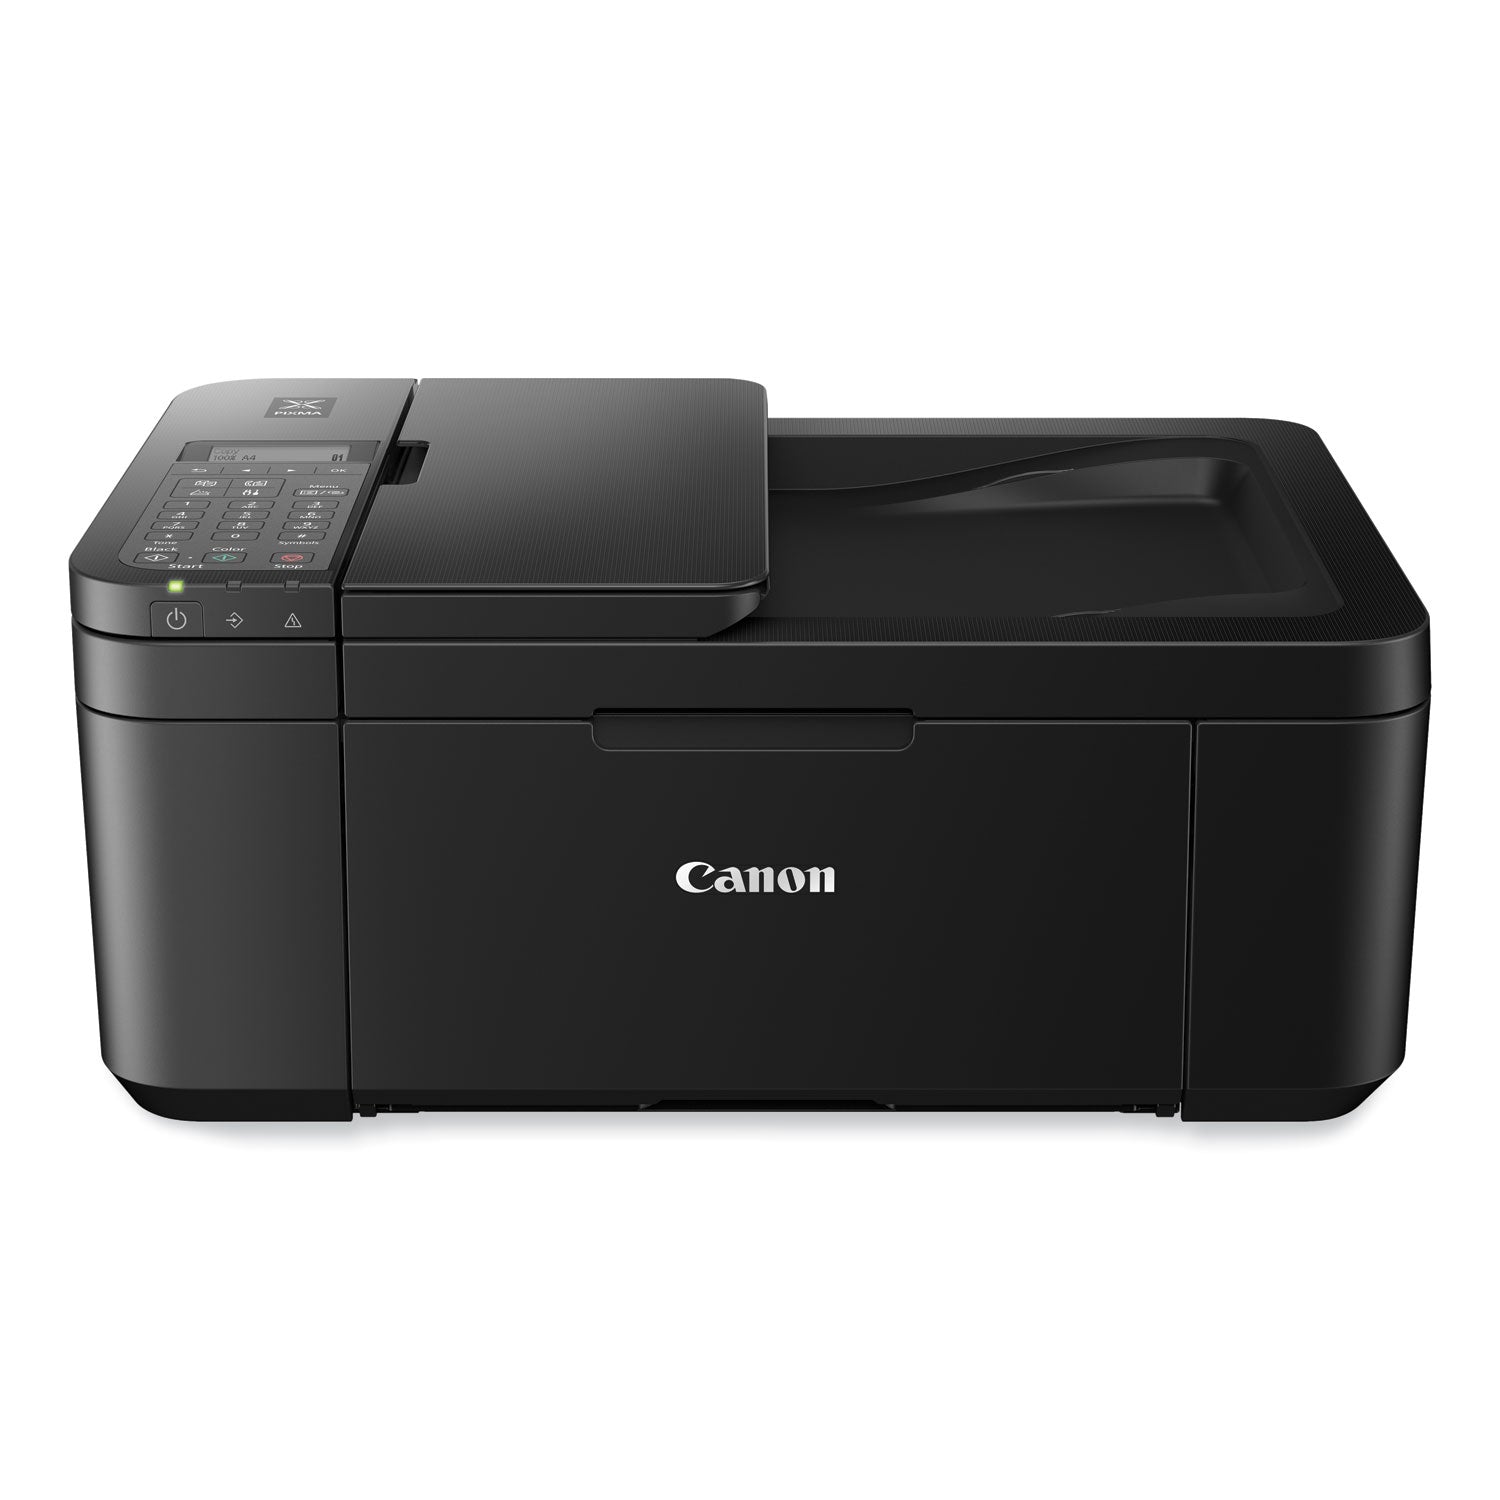 pixma-tr4720-all-in-one-printer-copy-fax-print-scan-black_cnm5074c002 - 1